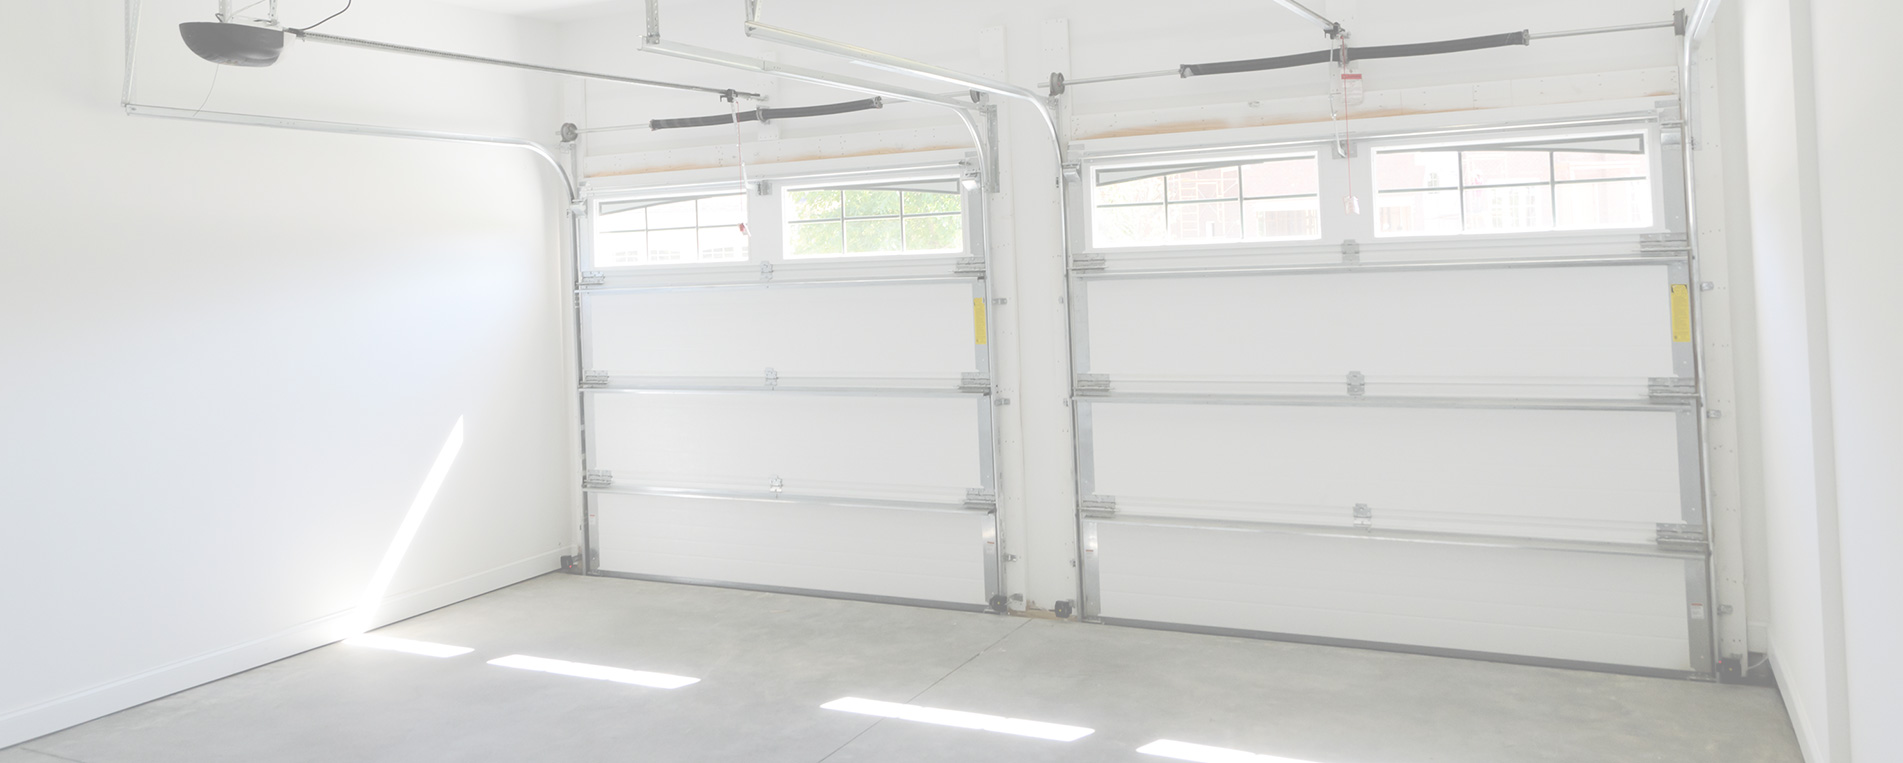 A Few Useful Garage Door Safety Tips